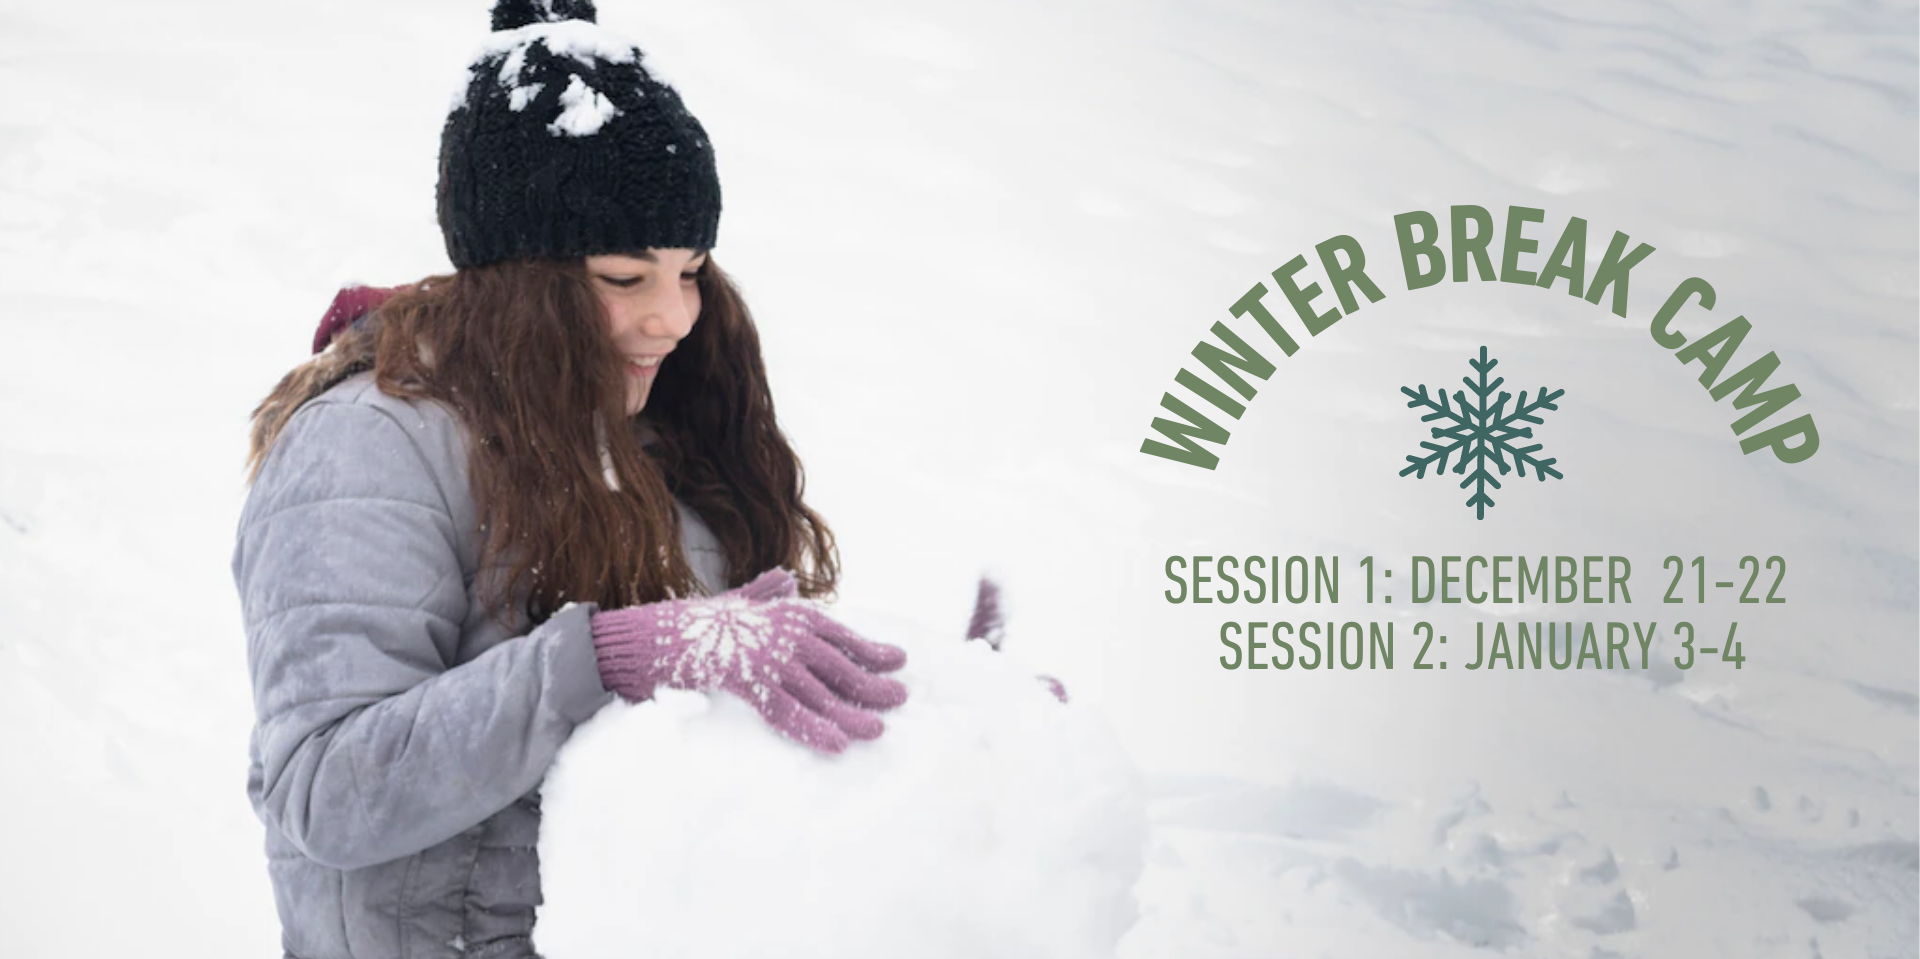 Winter Break Camp promotional image